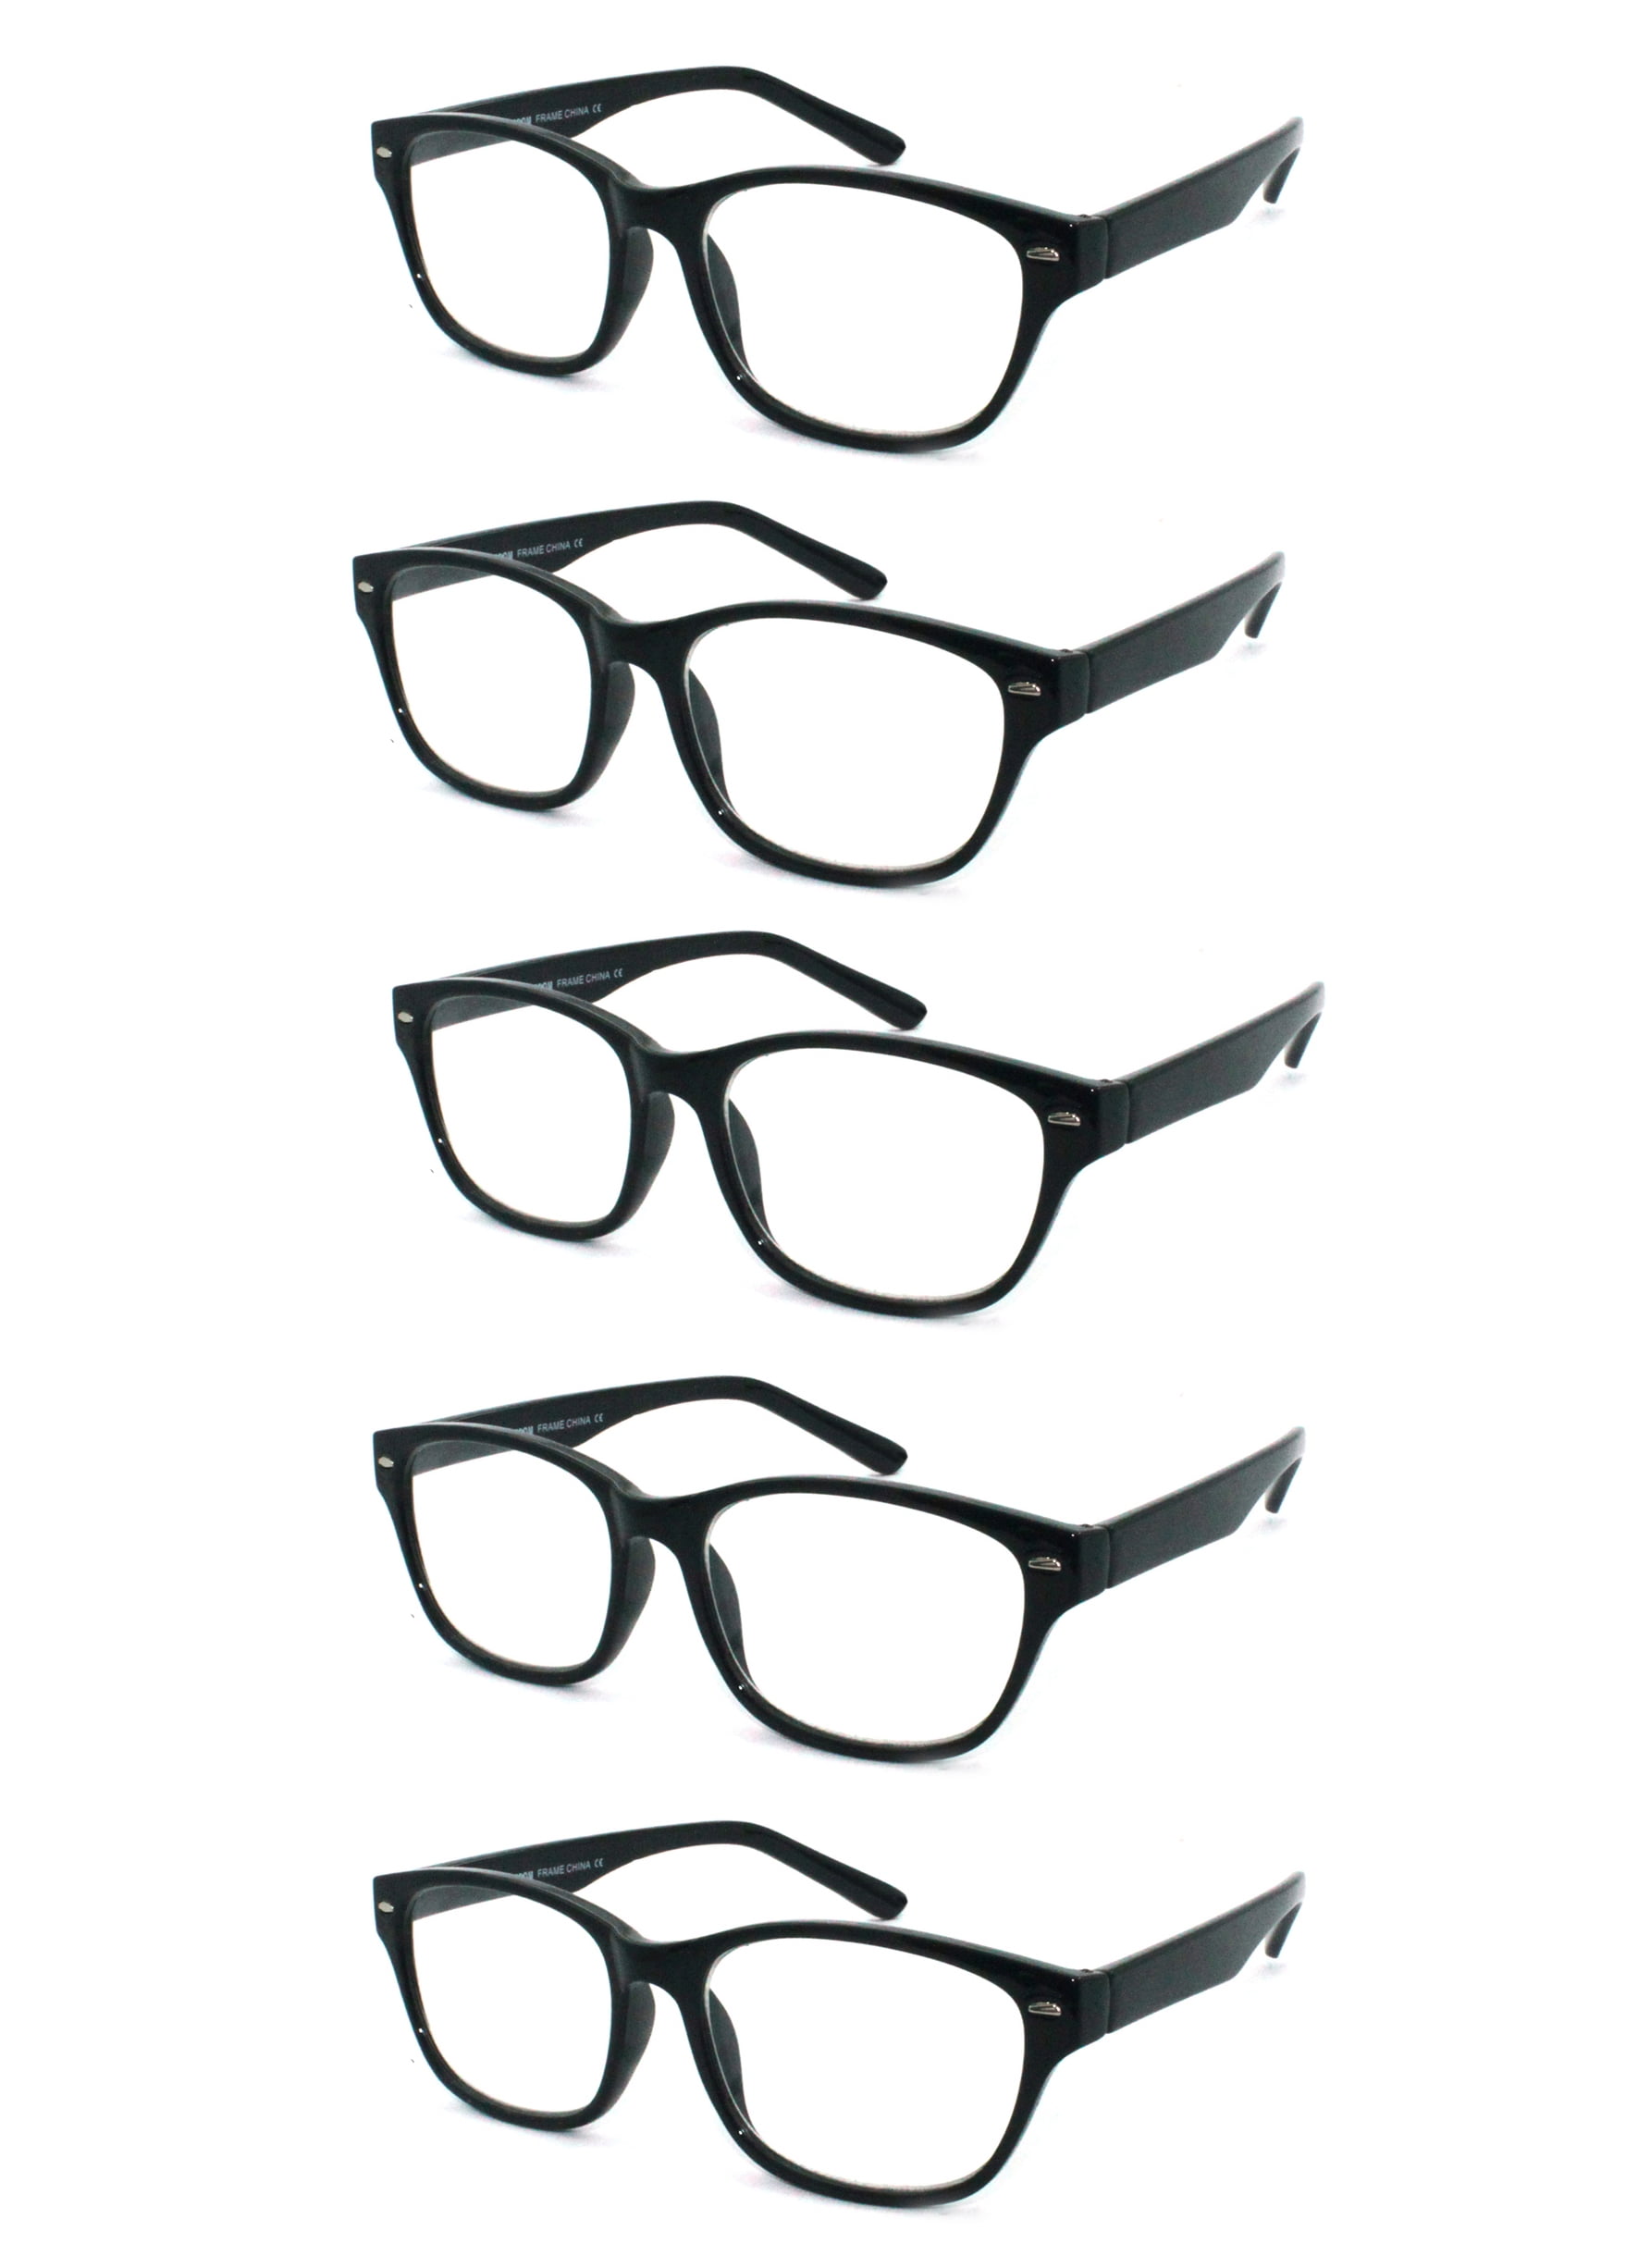 EYE ZOOM 5 Pairs Retro Readers Plastic Vintage Style Reading Glasses ...